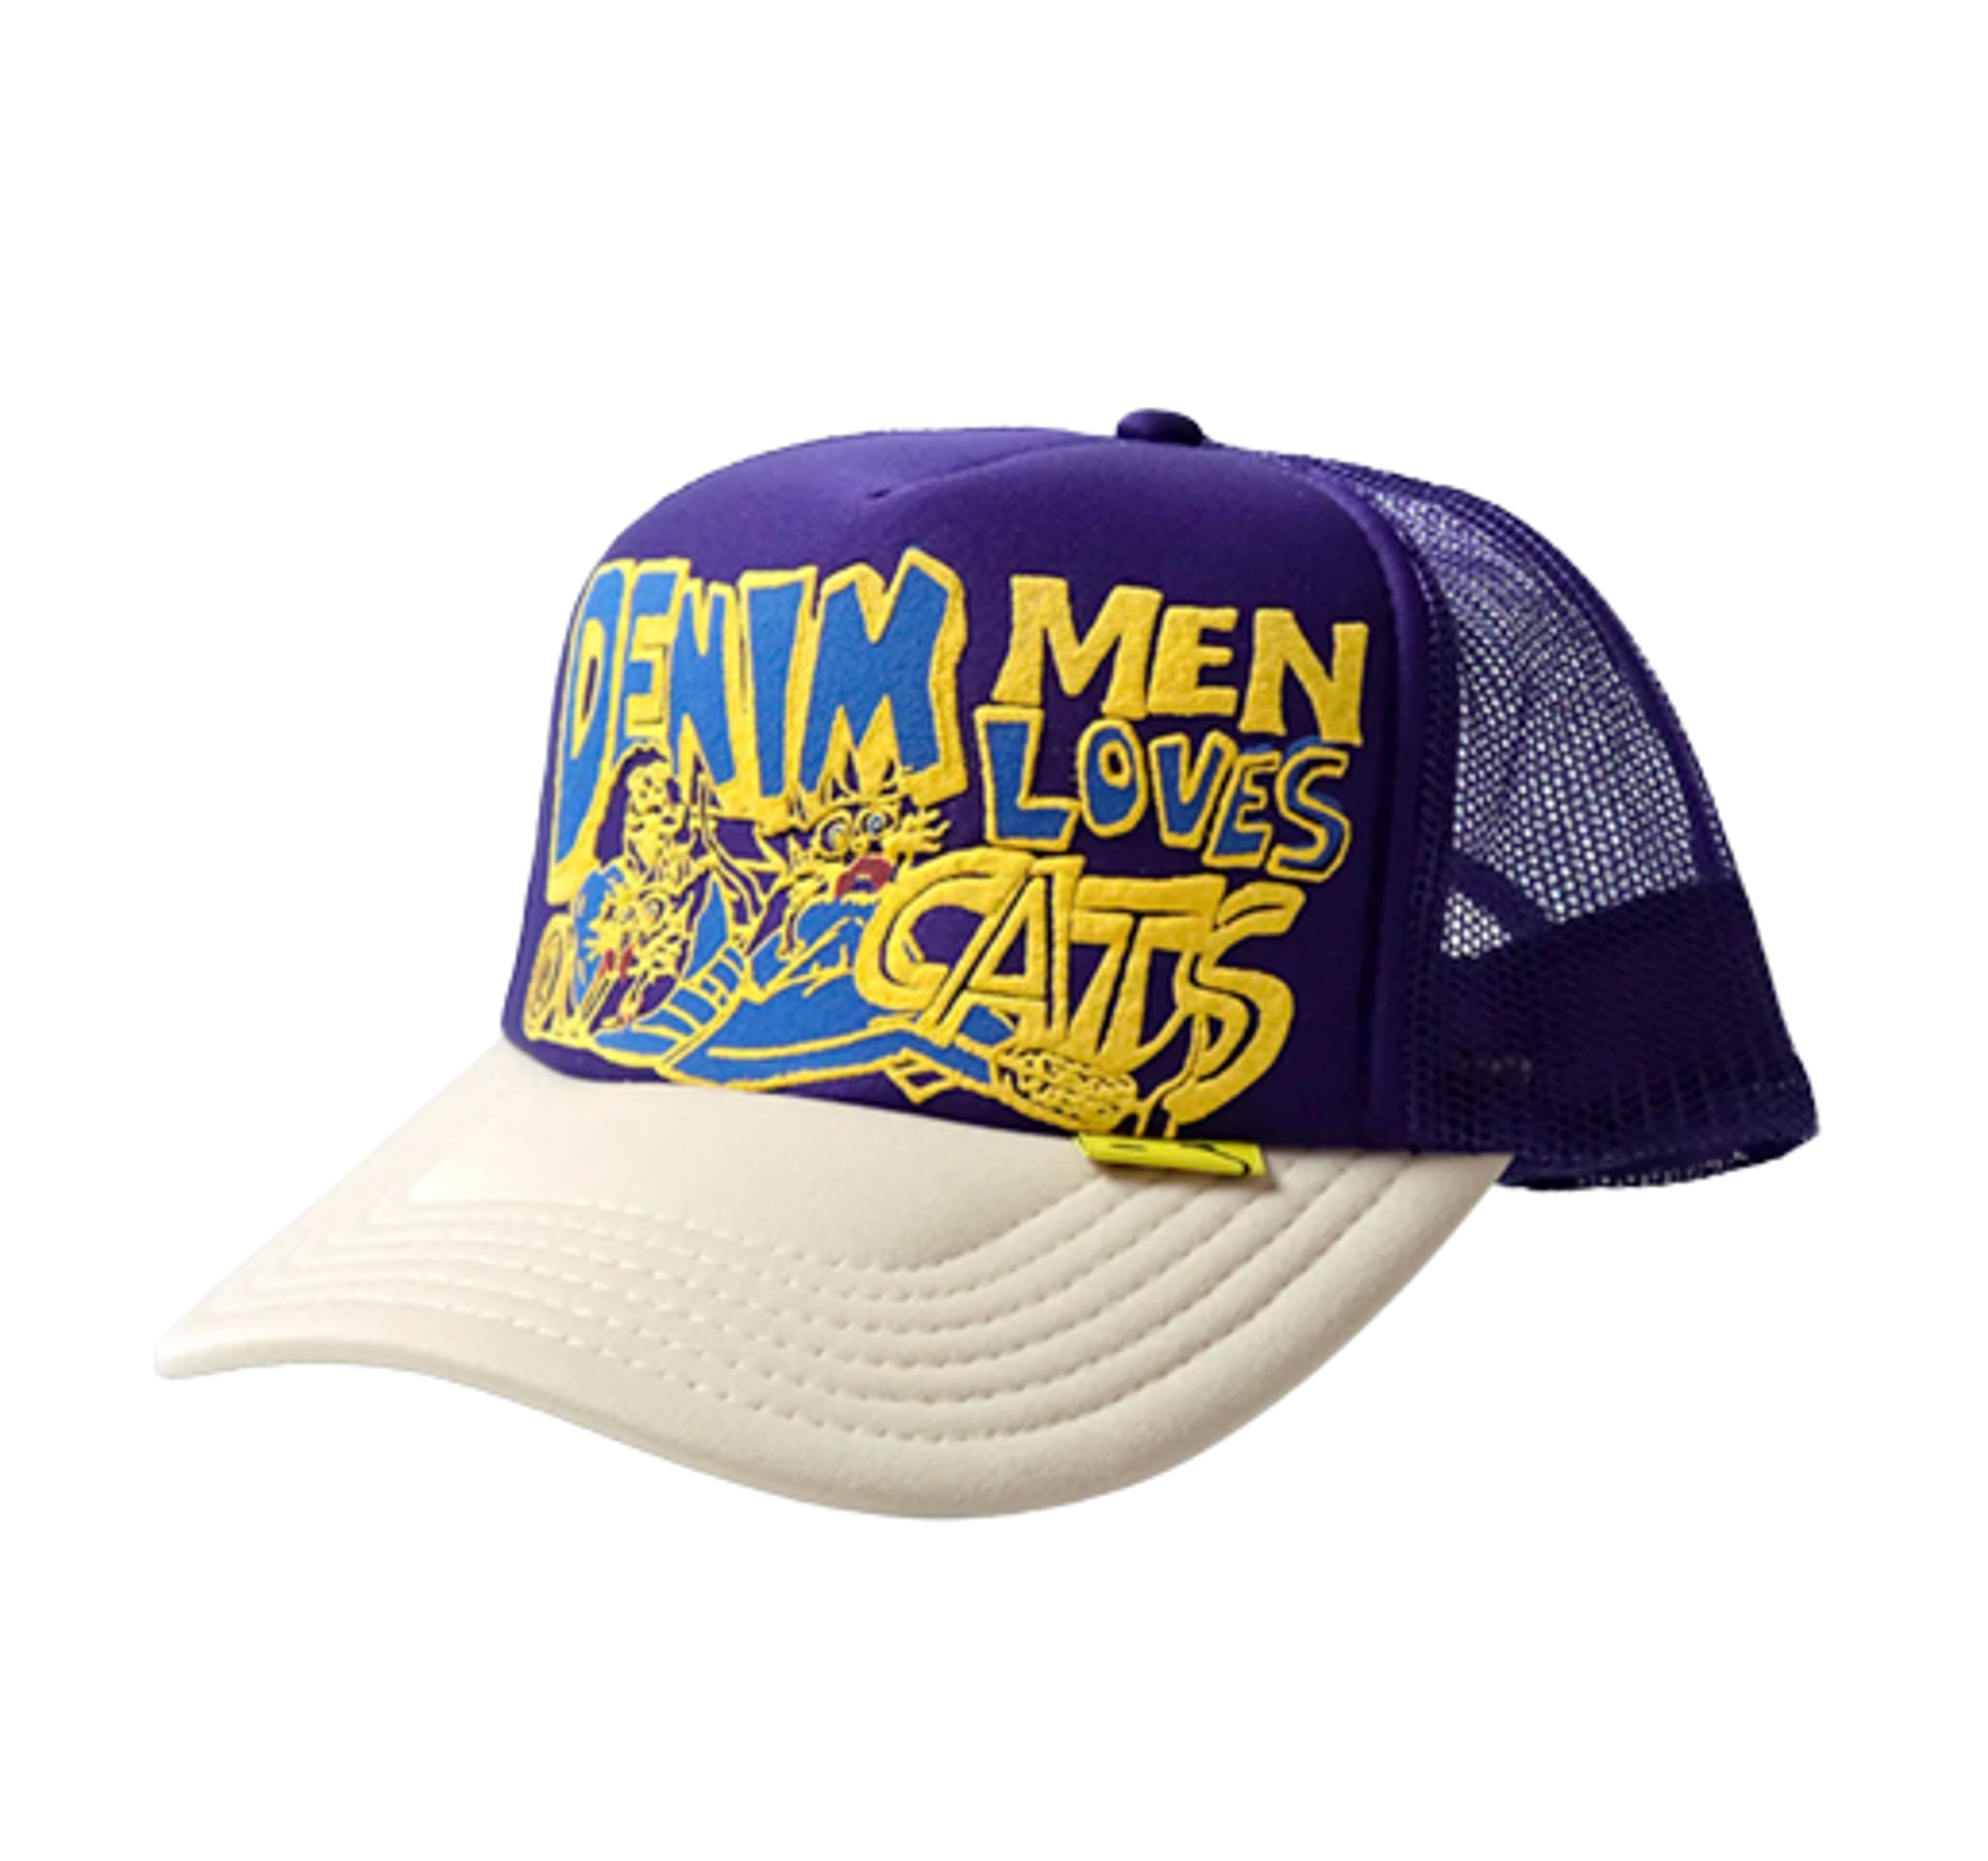 Kapital Denim Men Love Cats Camo Trucker Hat Natural Purple